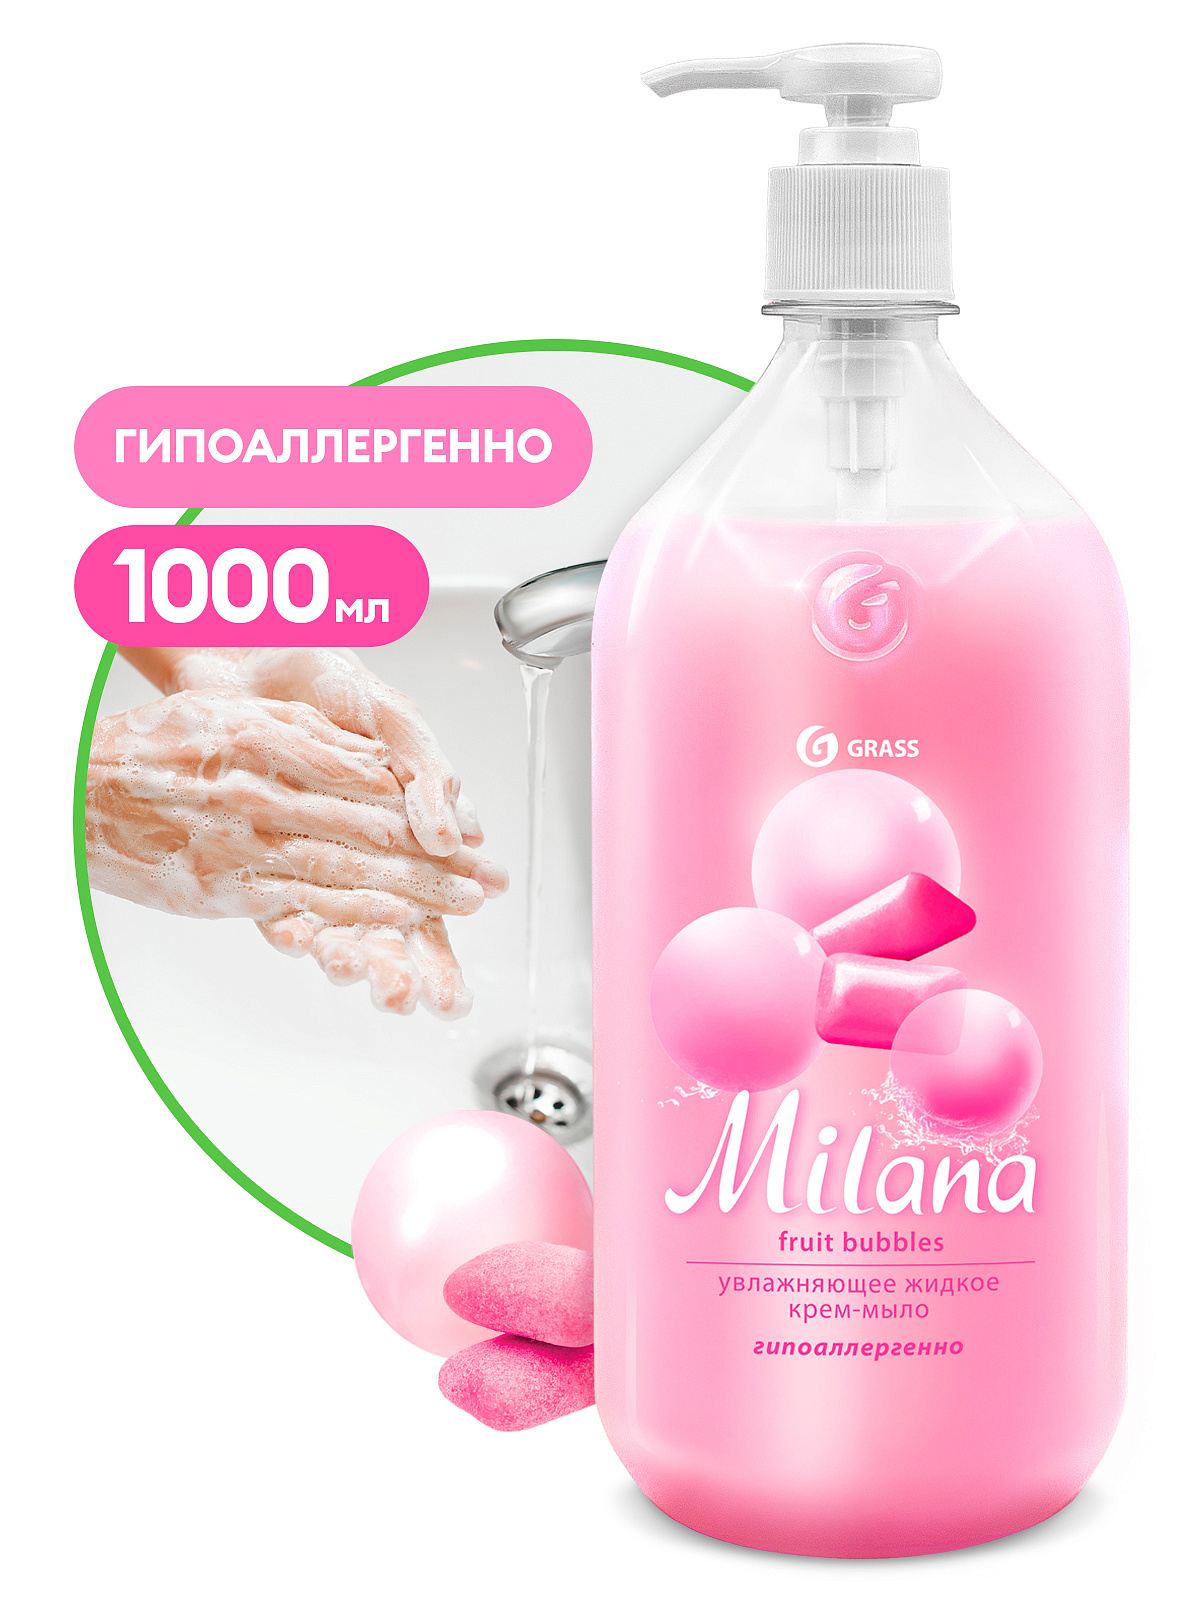 1 Жидкое крем-мыло "Milana" fruit bubbles (флакон 1000 мл)